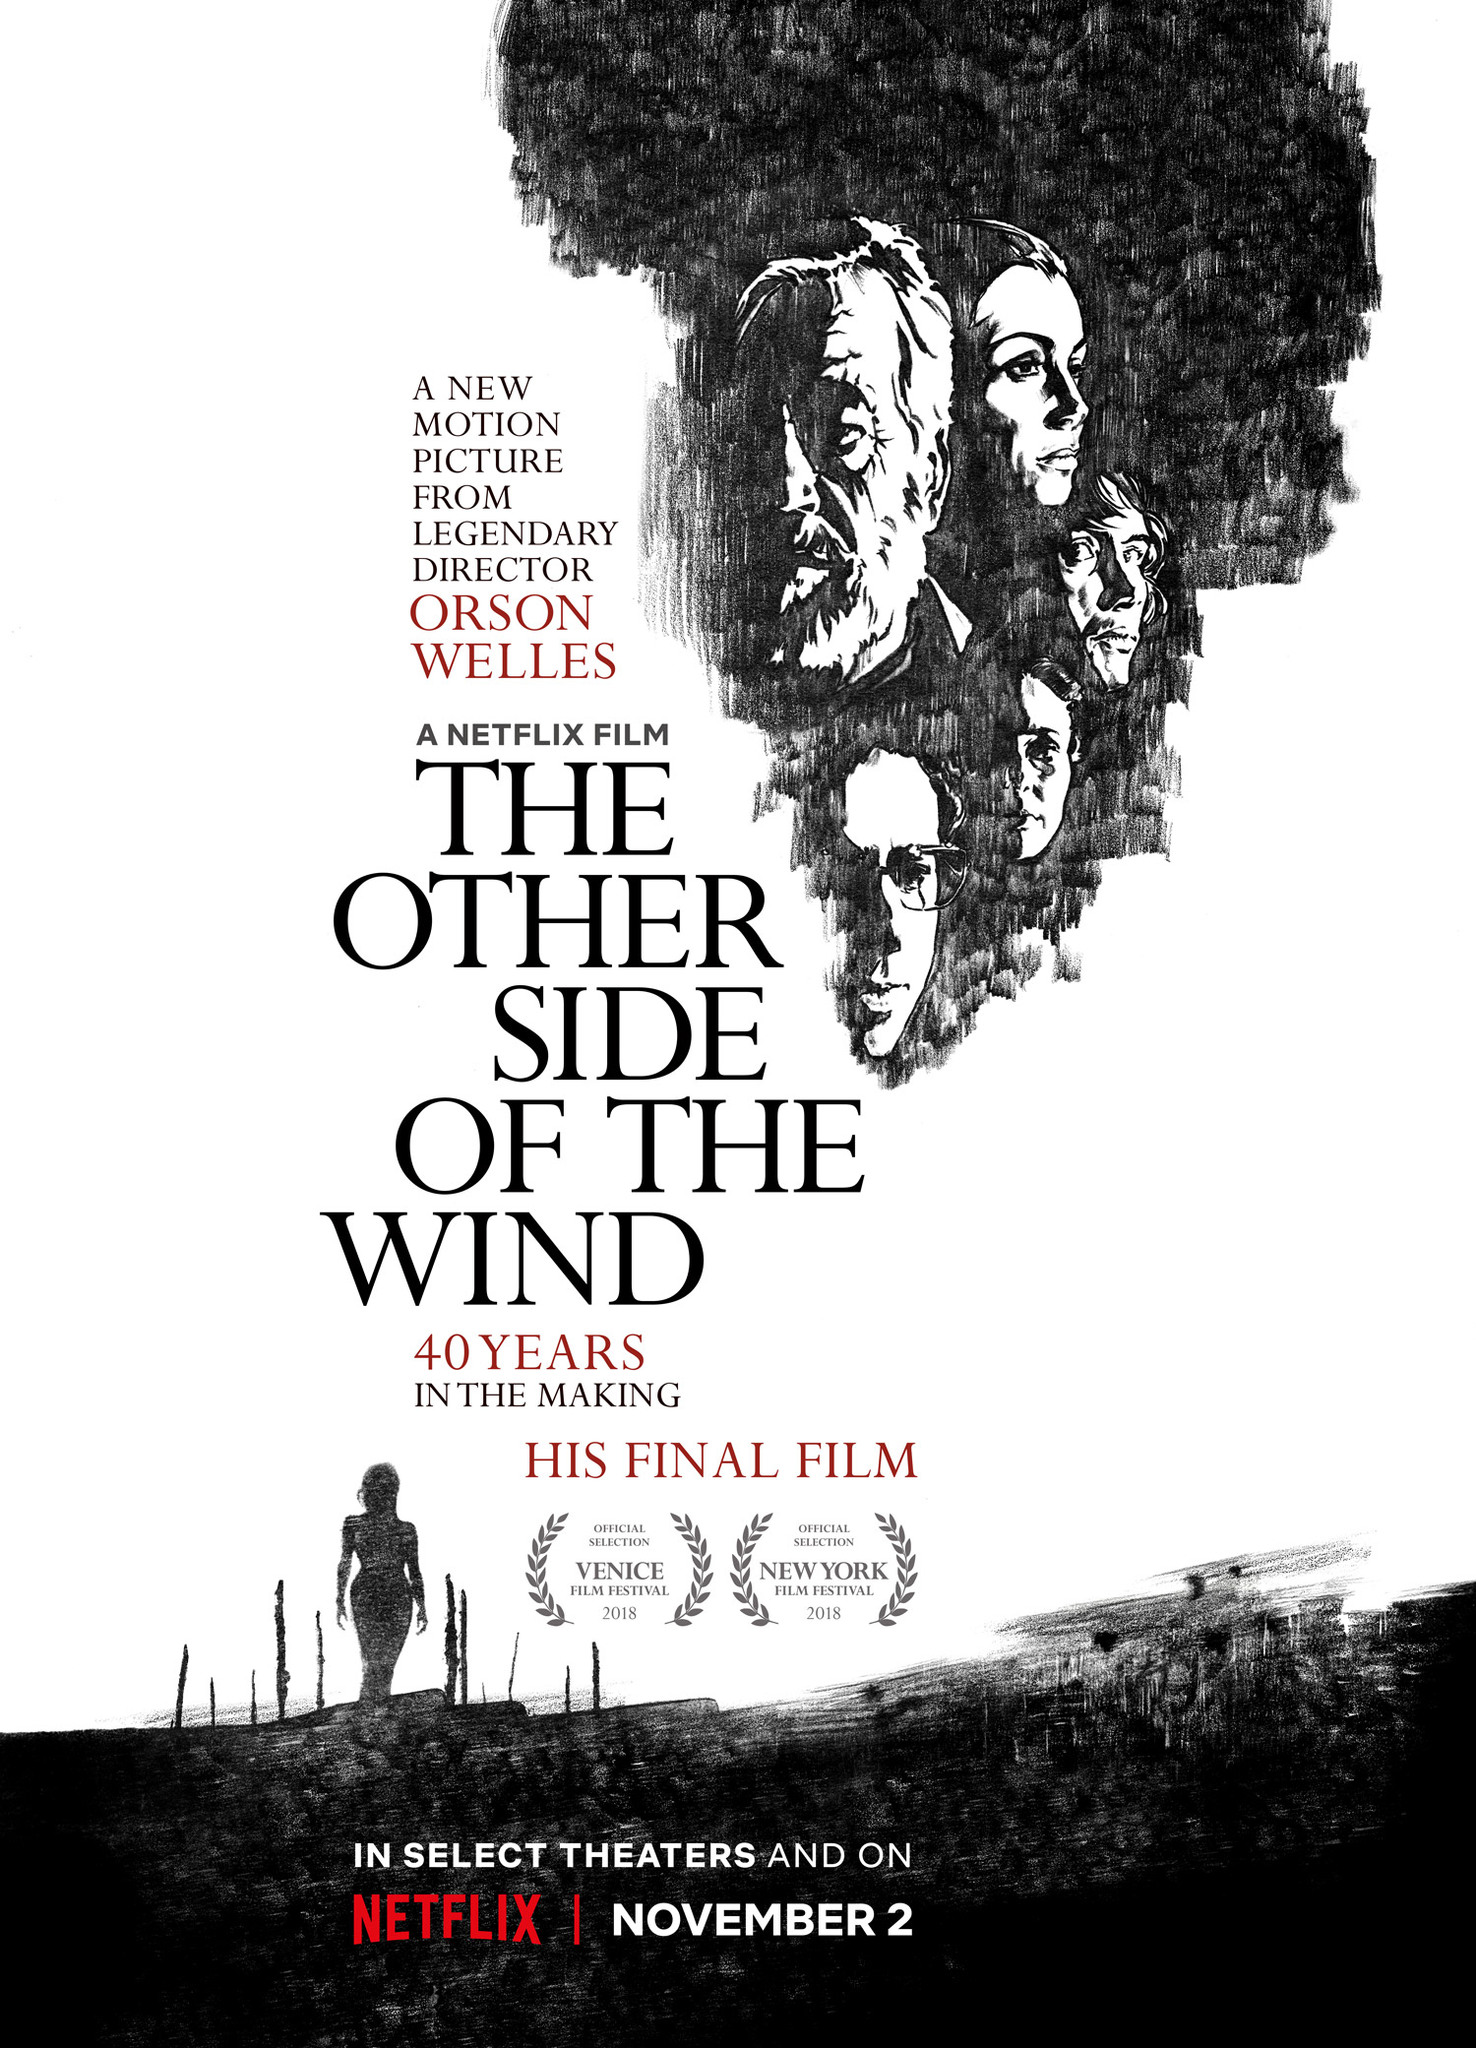 Nonton film The Other Side of the Wind layarkaca21 indoxx1 ganool online streaming terbaru